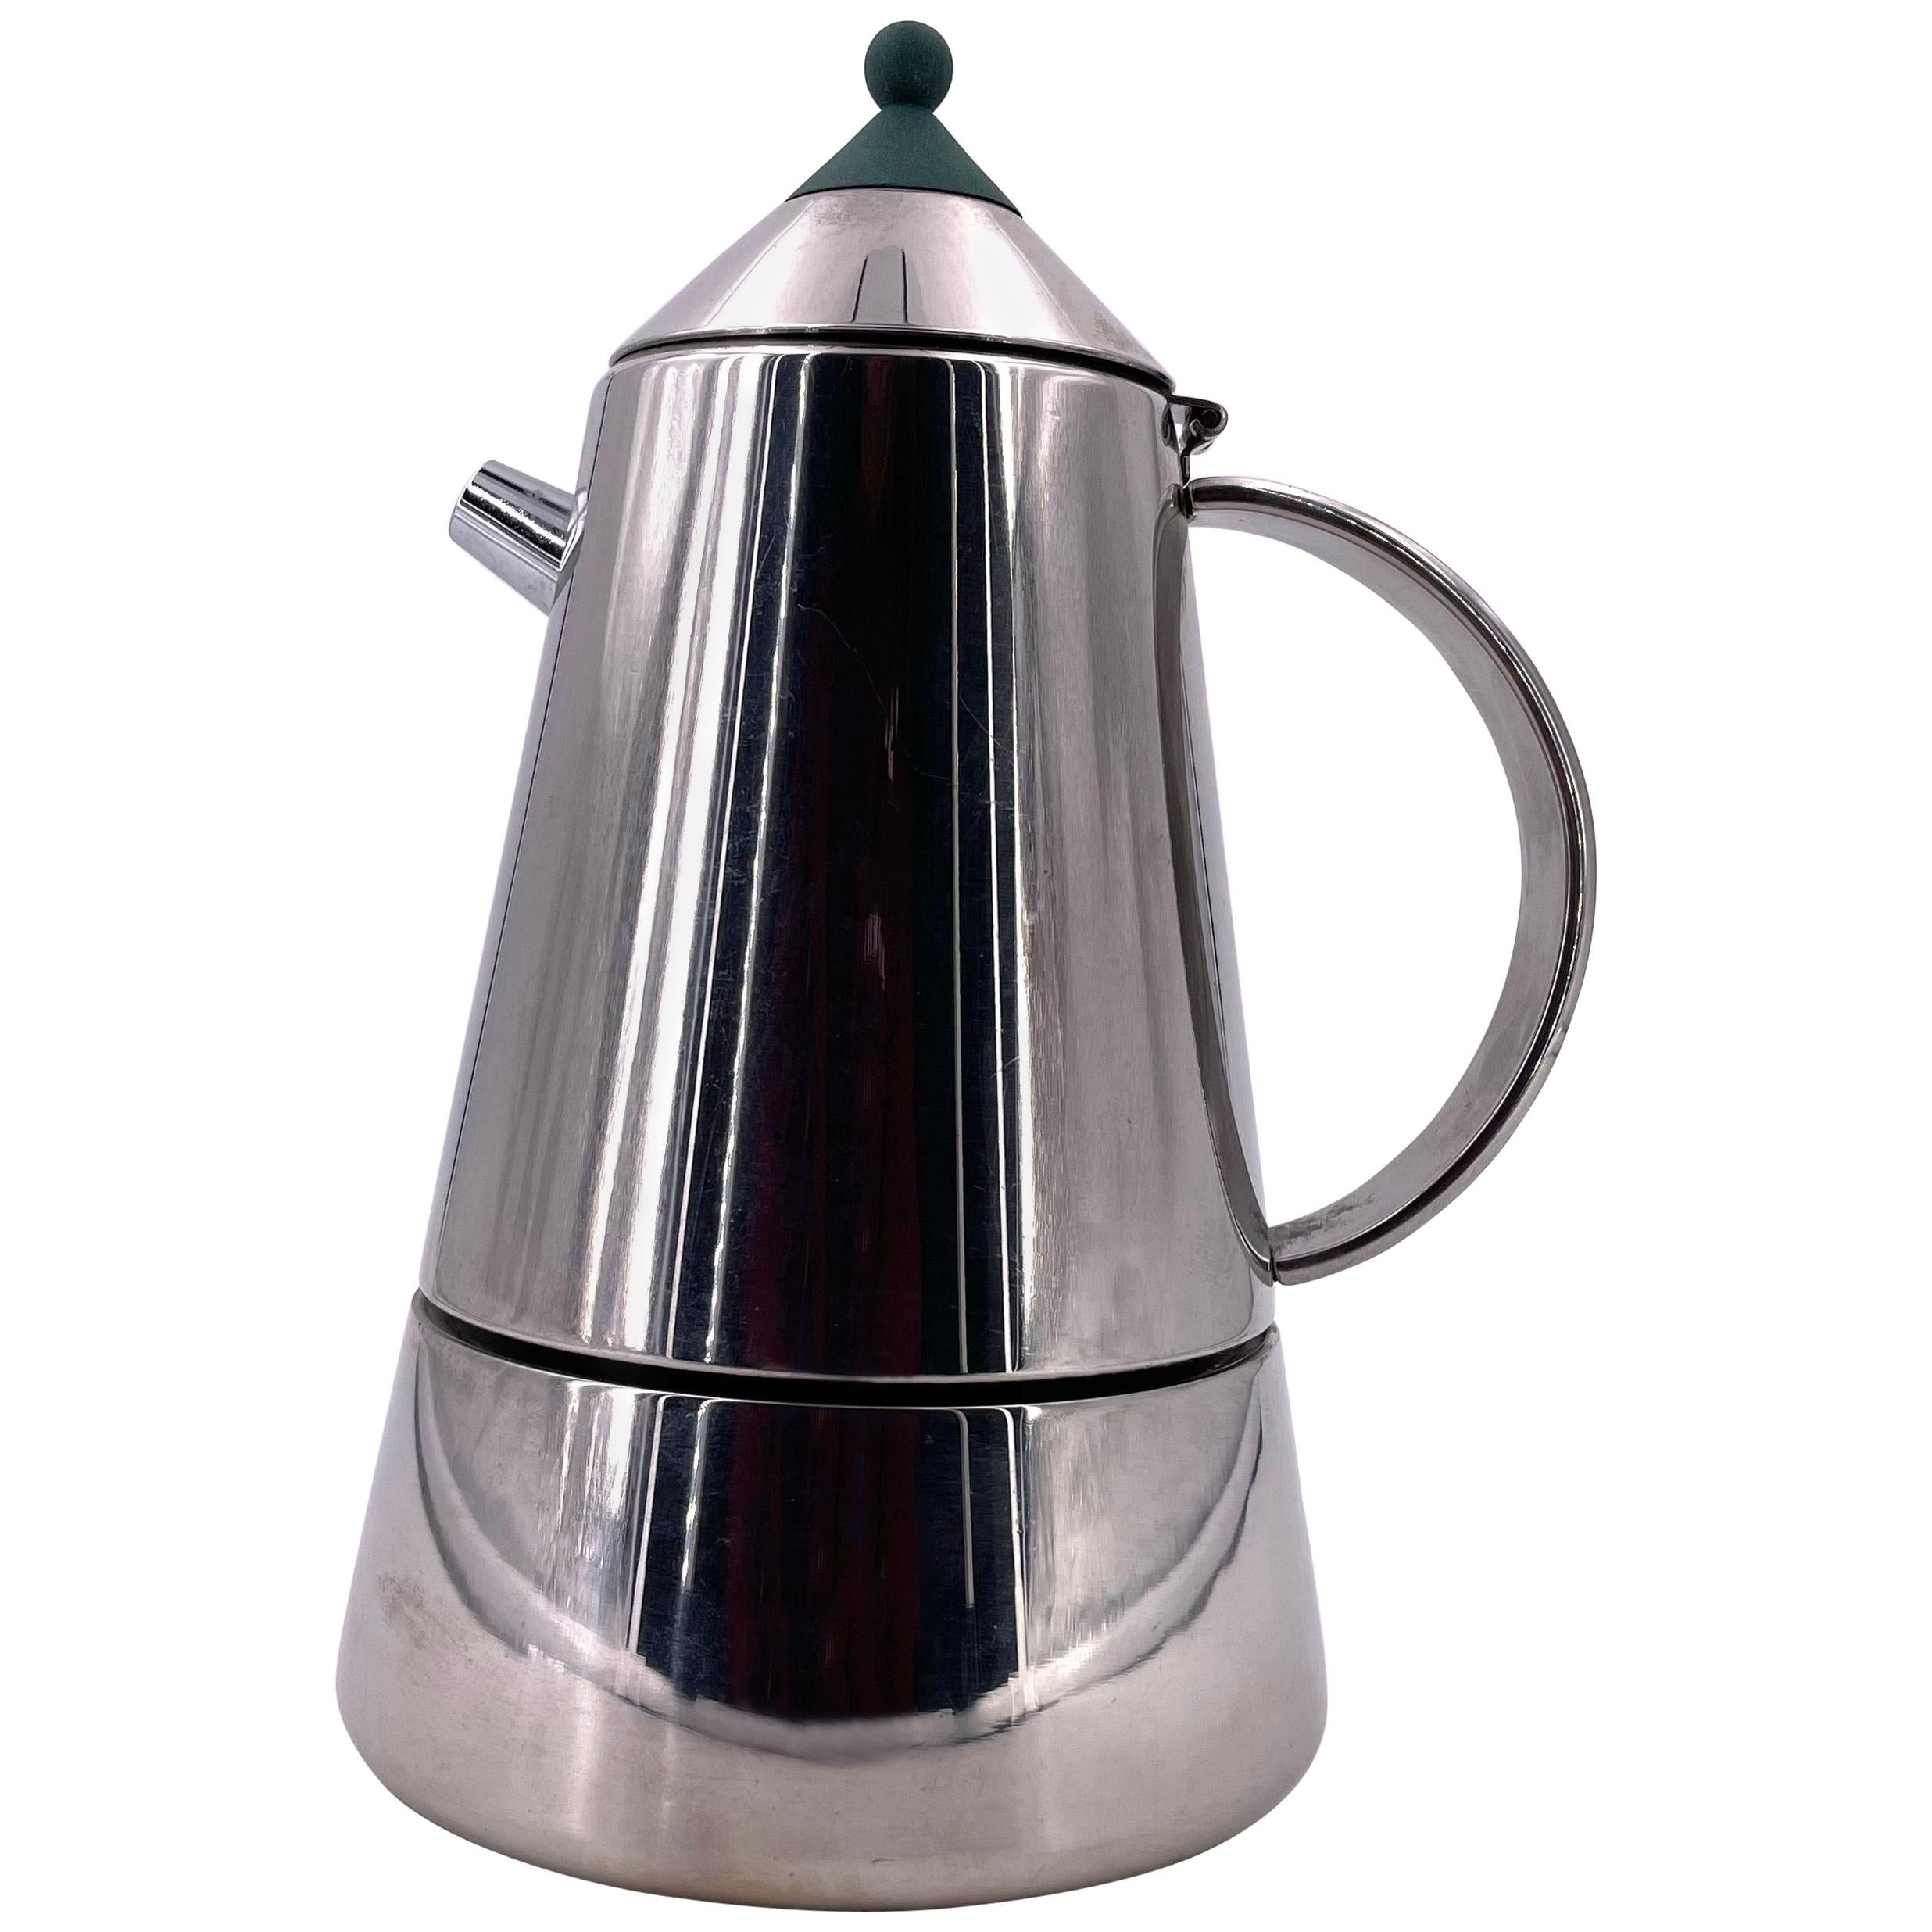 https://a.1stdibscdn.com/espresso-coffee-maker-postmodern-design-by-bialetti-6-cup-for-sale/1121189/f_226004221613798423497/22600422_master.jpg